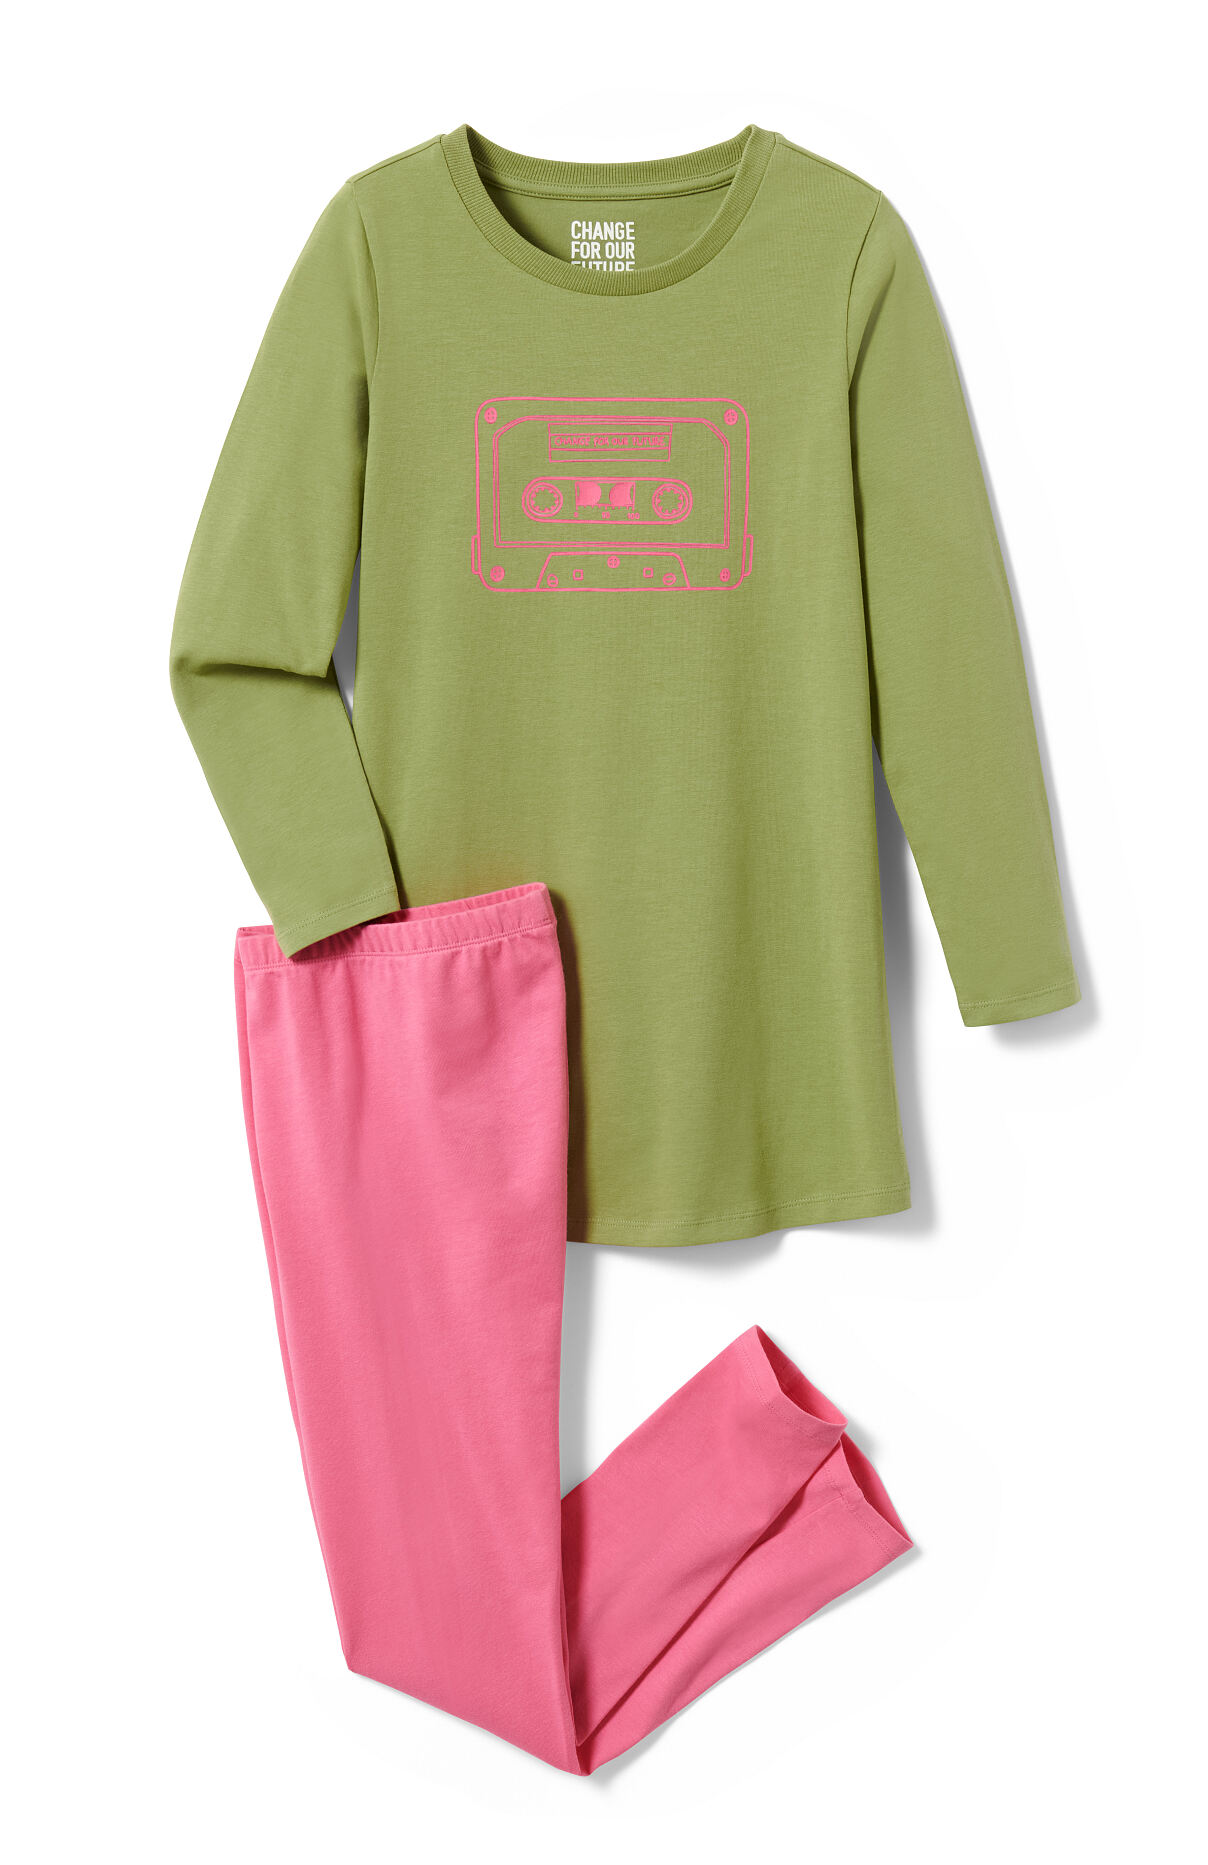 TCHIBO_127677 Kinder-Pyjama FS 2 grün-pink 06.23